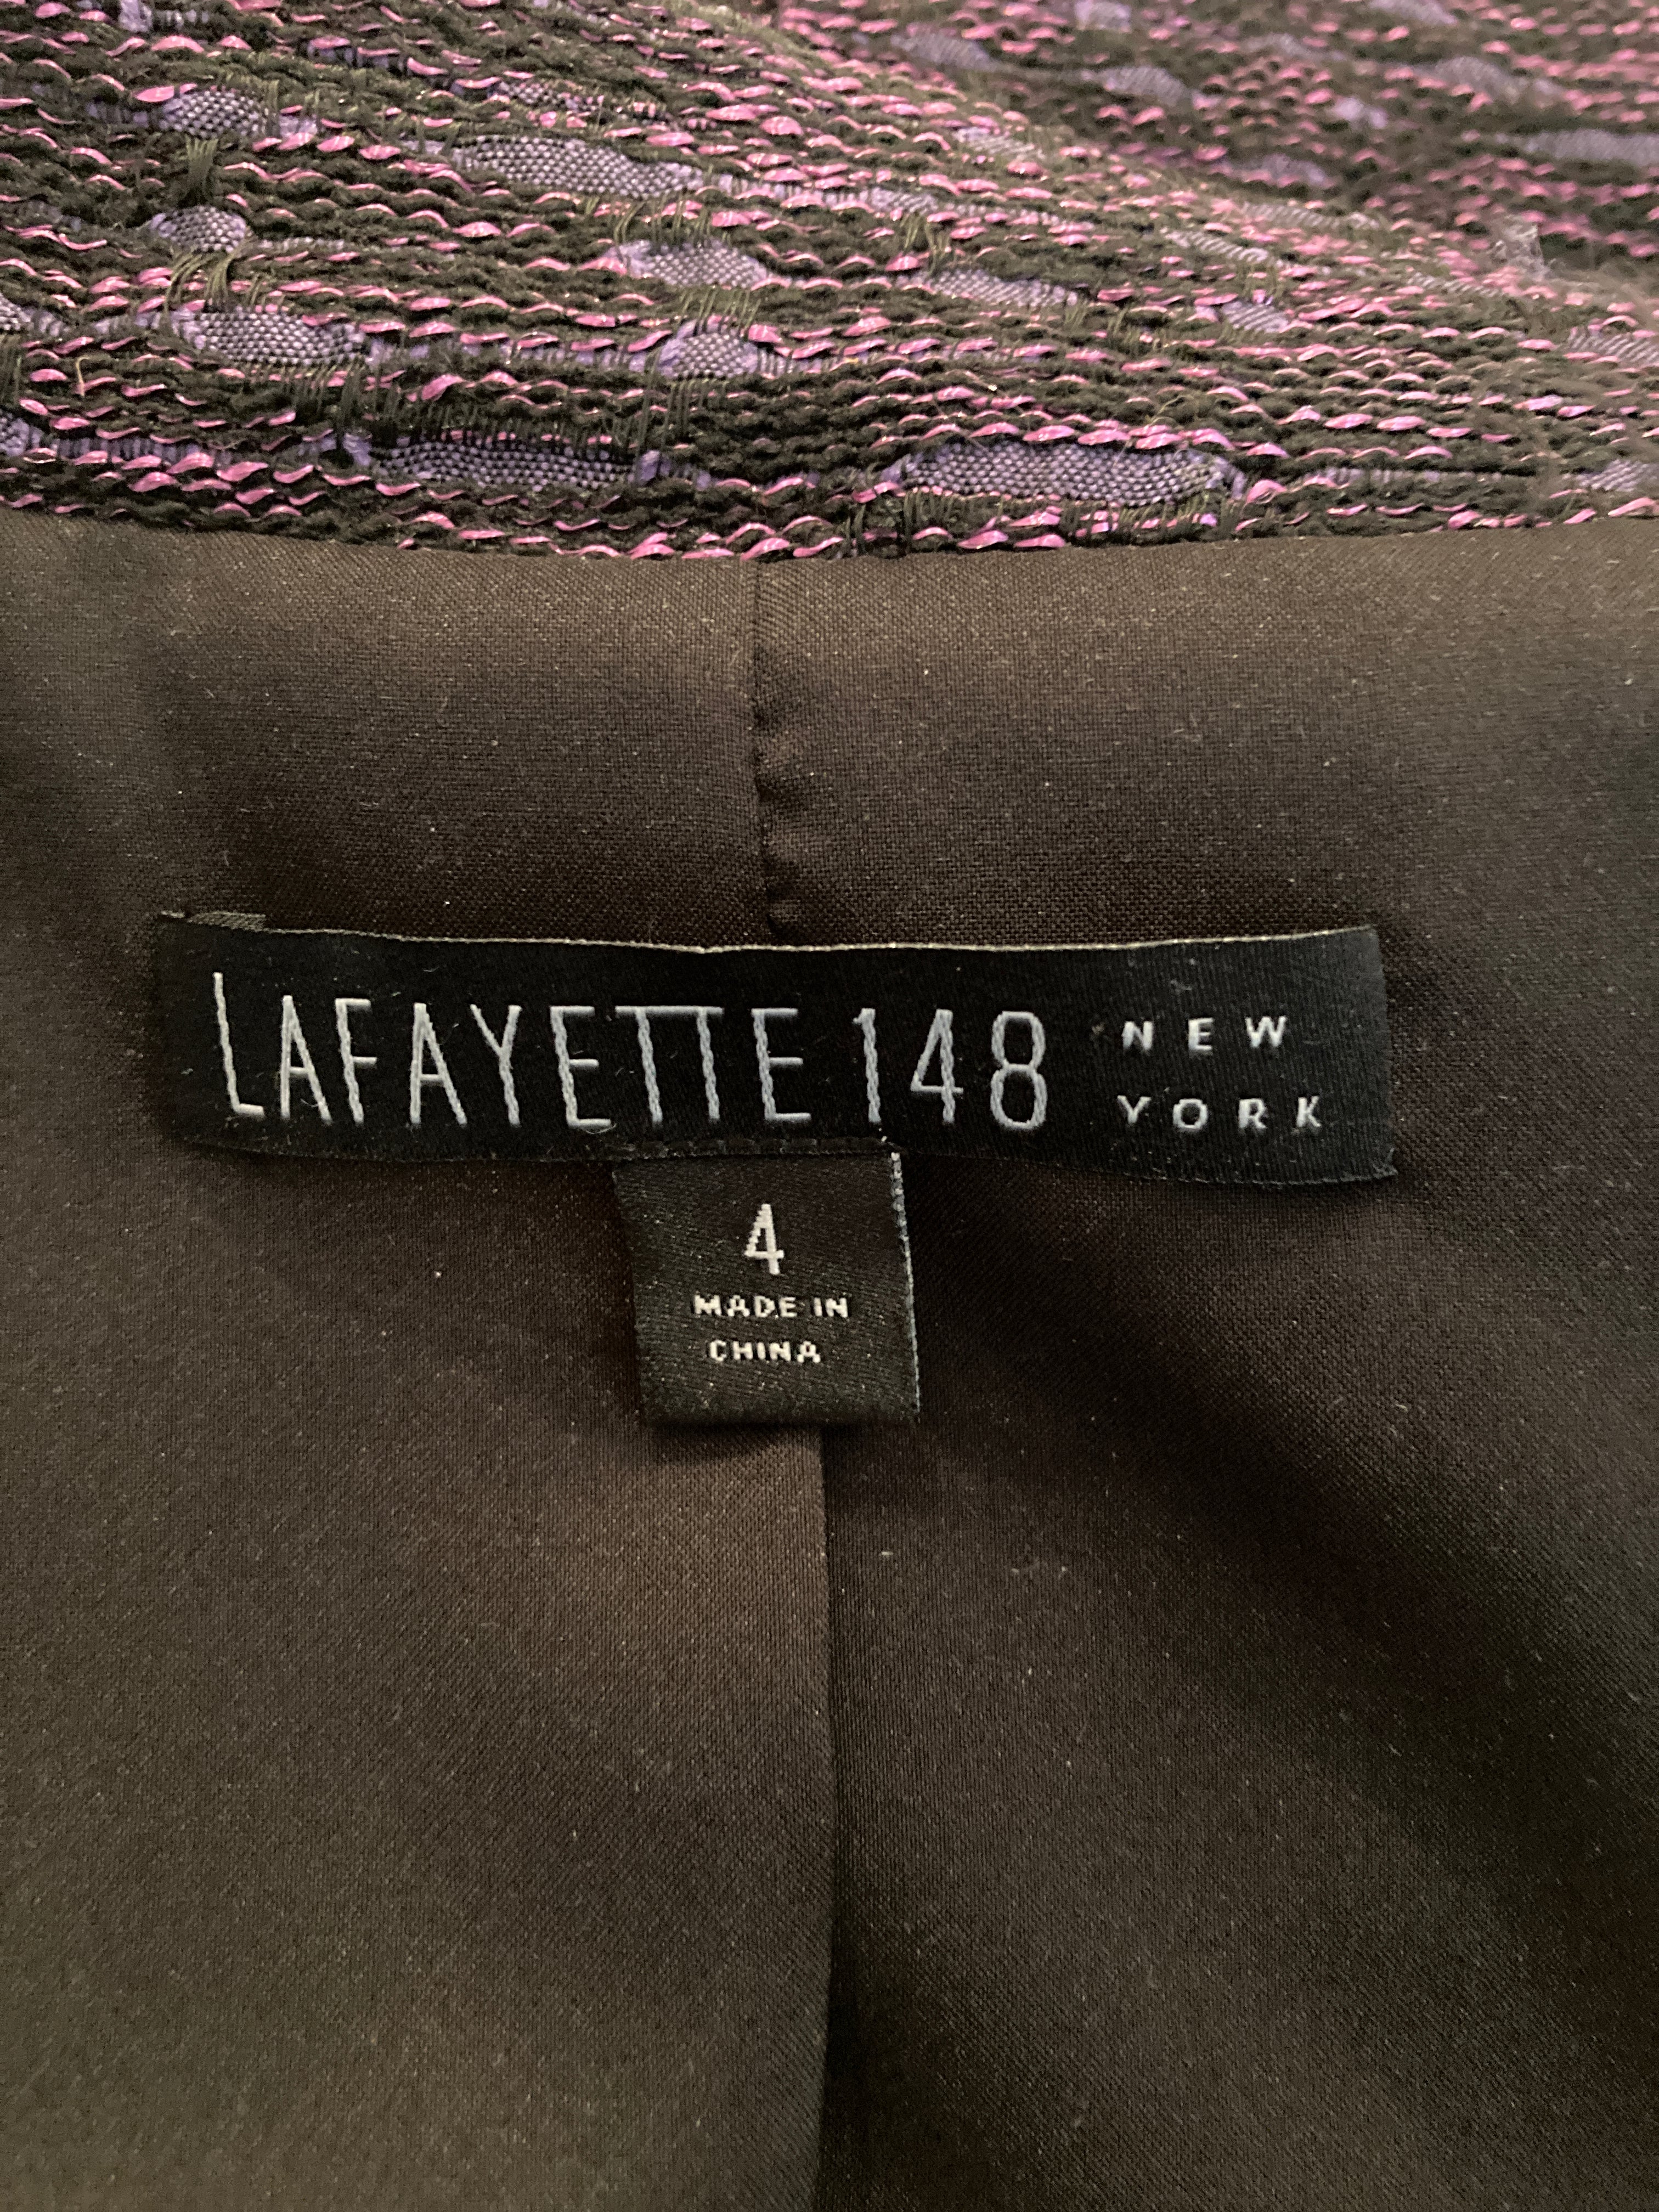 Lafayette 148 Purple Tweed Blazer, 4